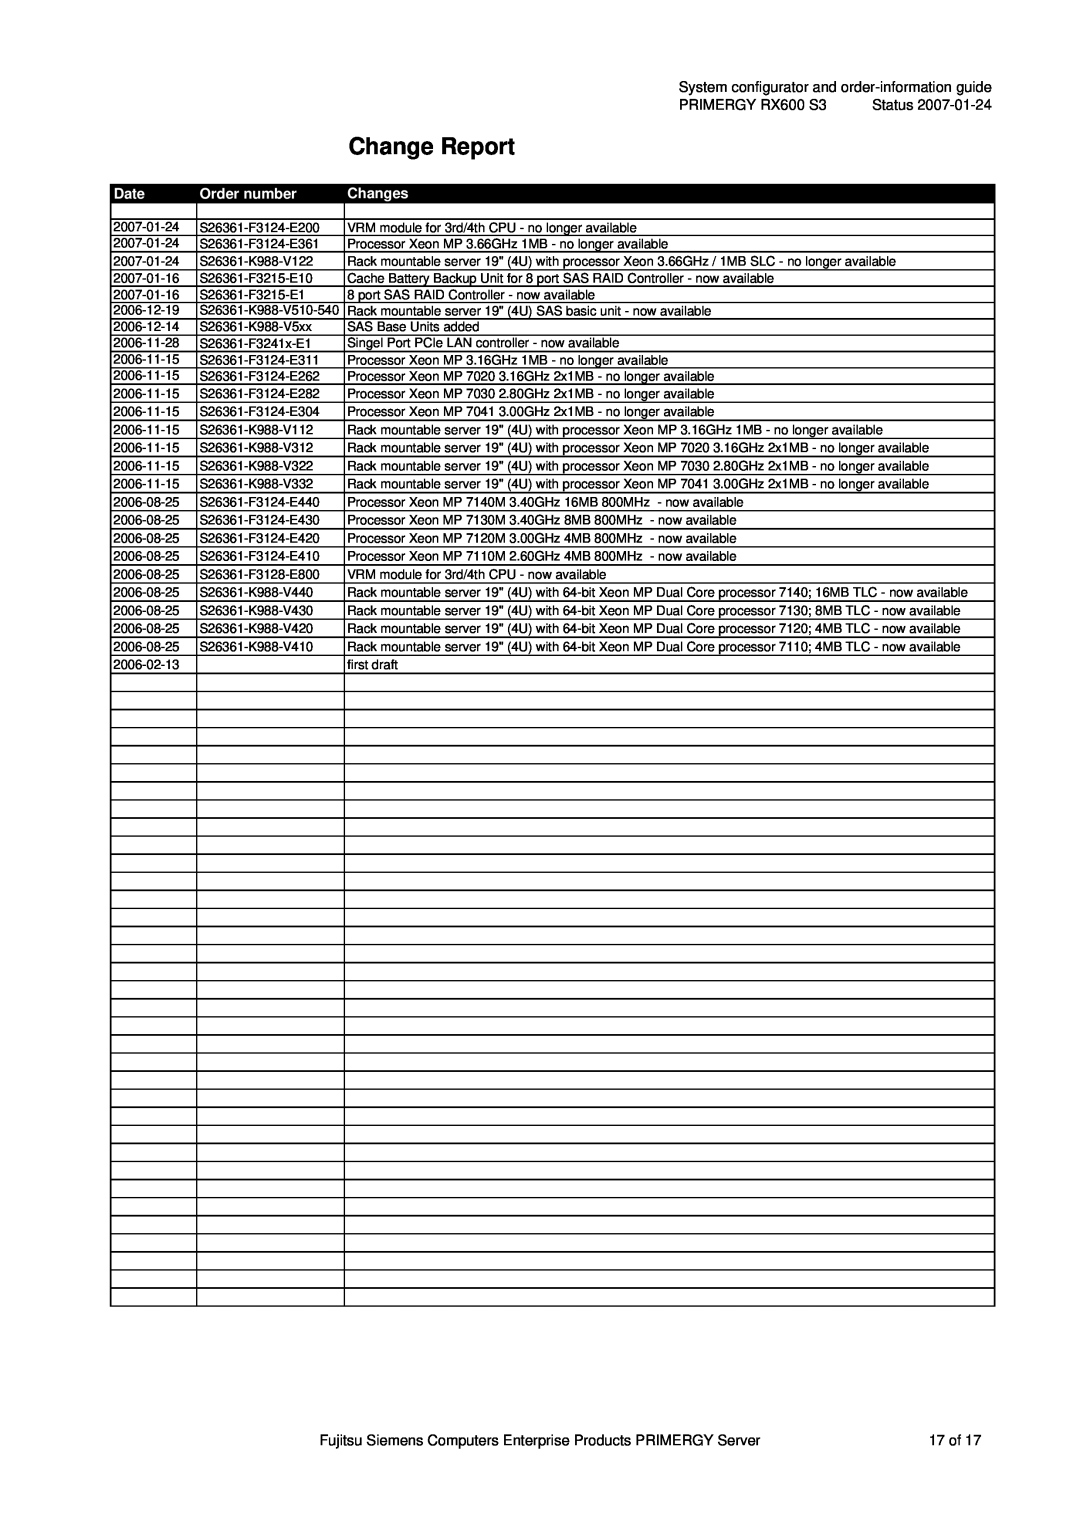 Fujitsu Siemens Computers manual Change Report, PRIMERGY RX600 S3, Status, Date, Order number, Changes 